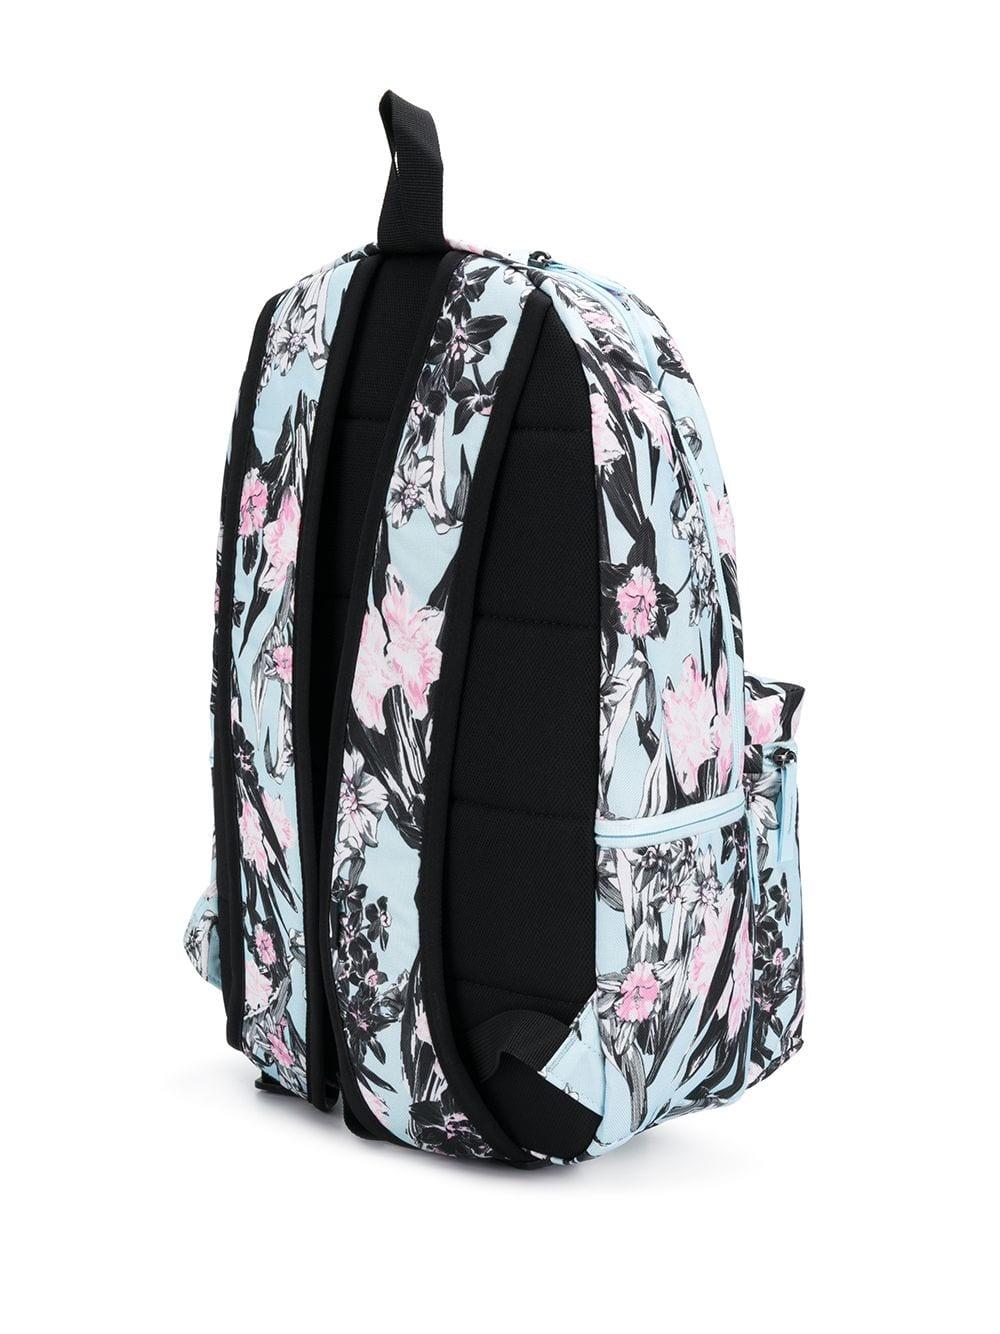 nike heritage ultra femme backpack